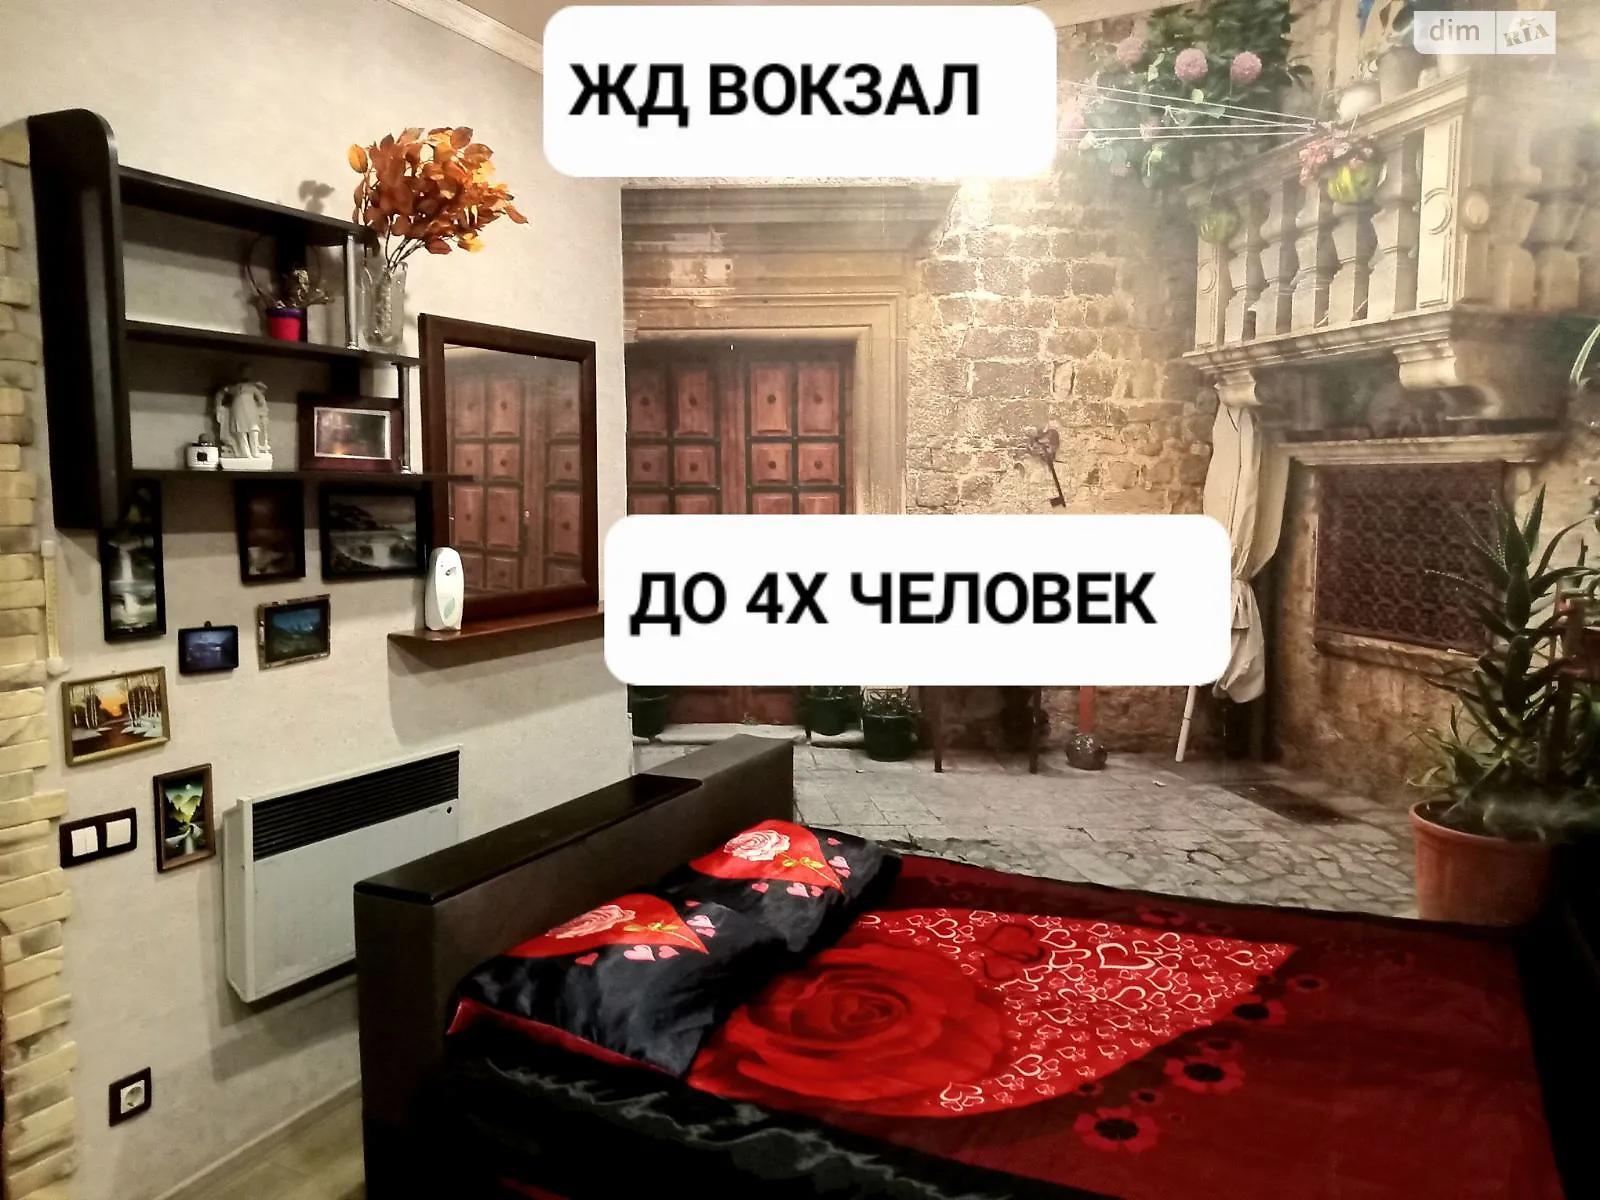 Сдается в аренду 1-комнатная квартира в Одессе, цена: 300 грн - фото 1